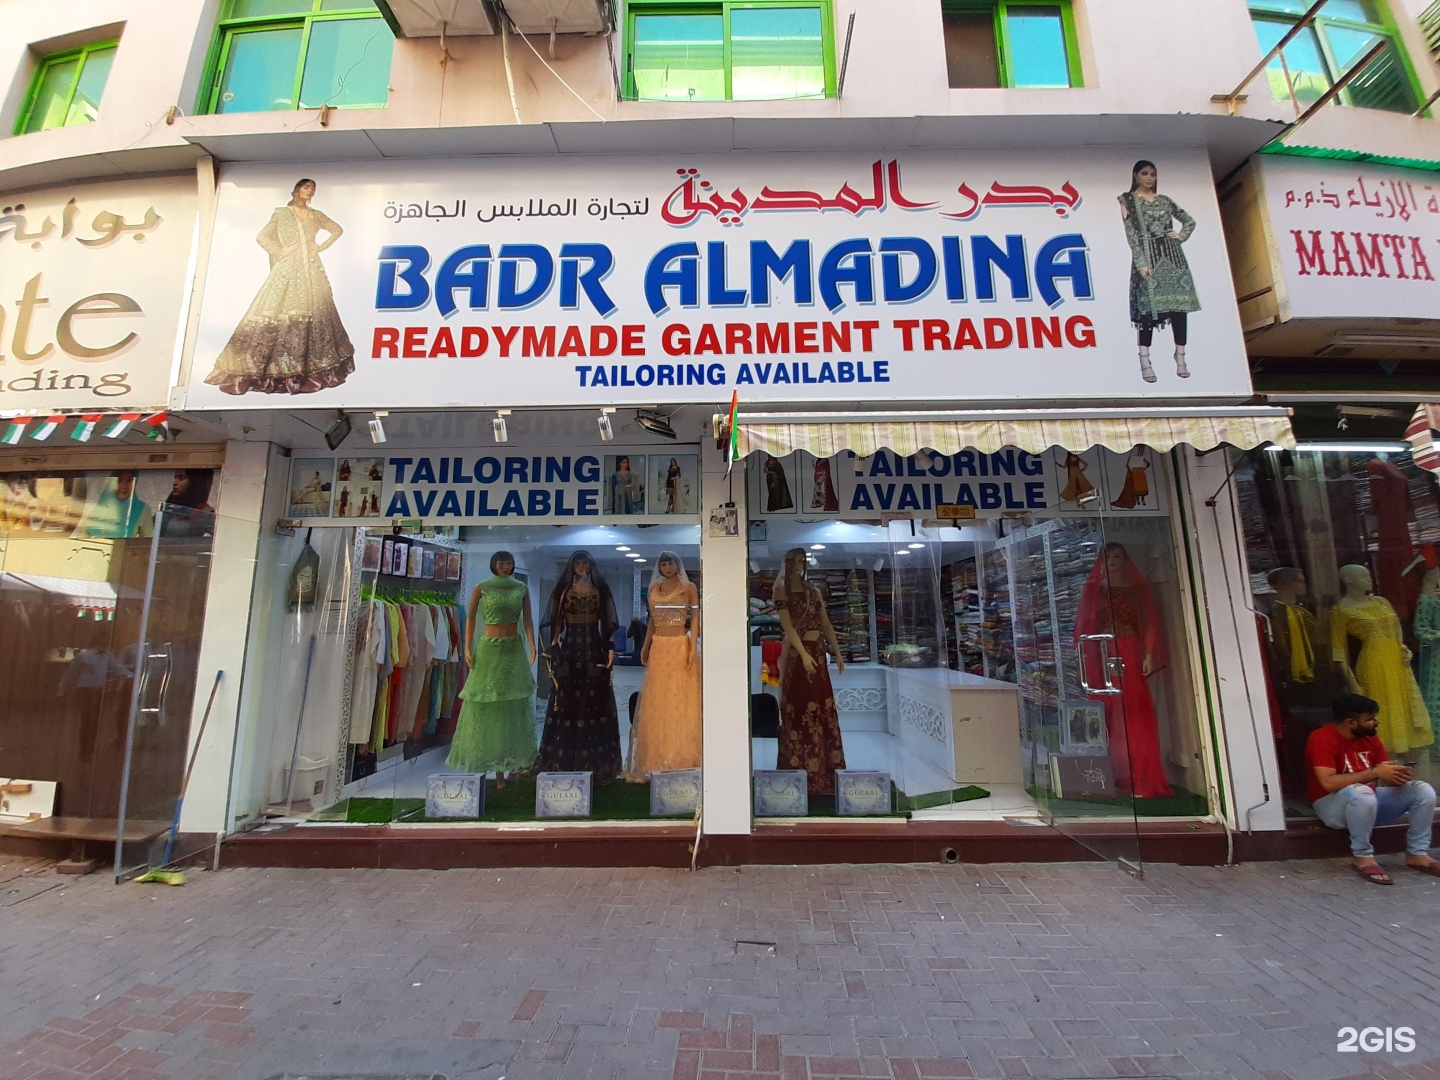 Readymade garment business in Dubai